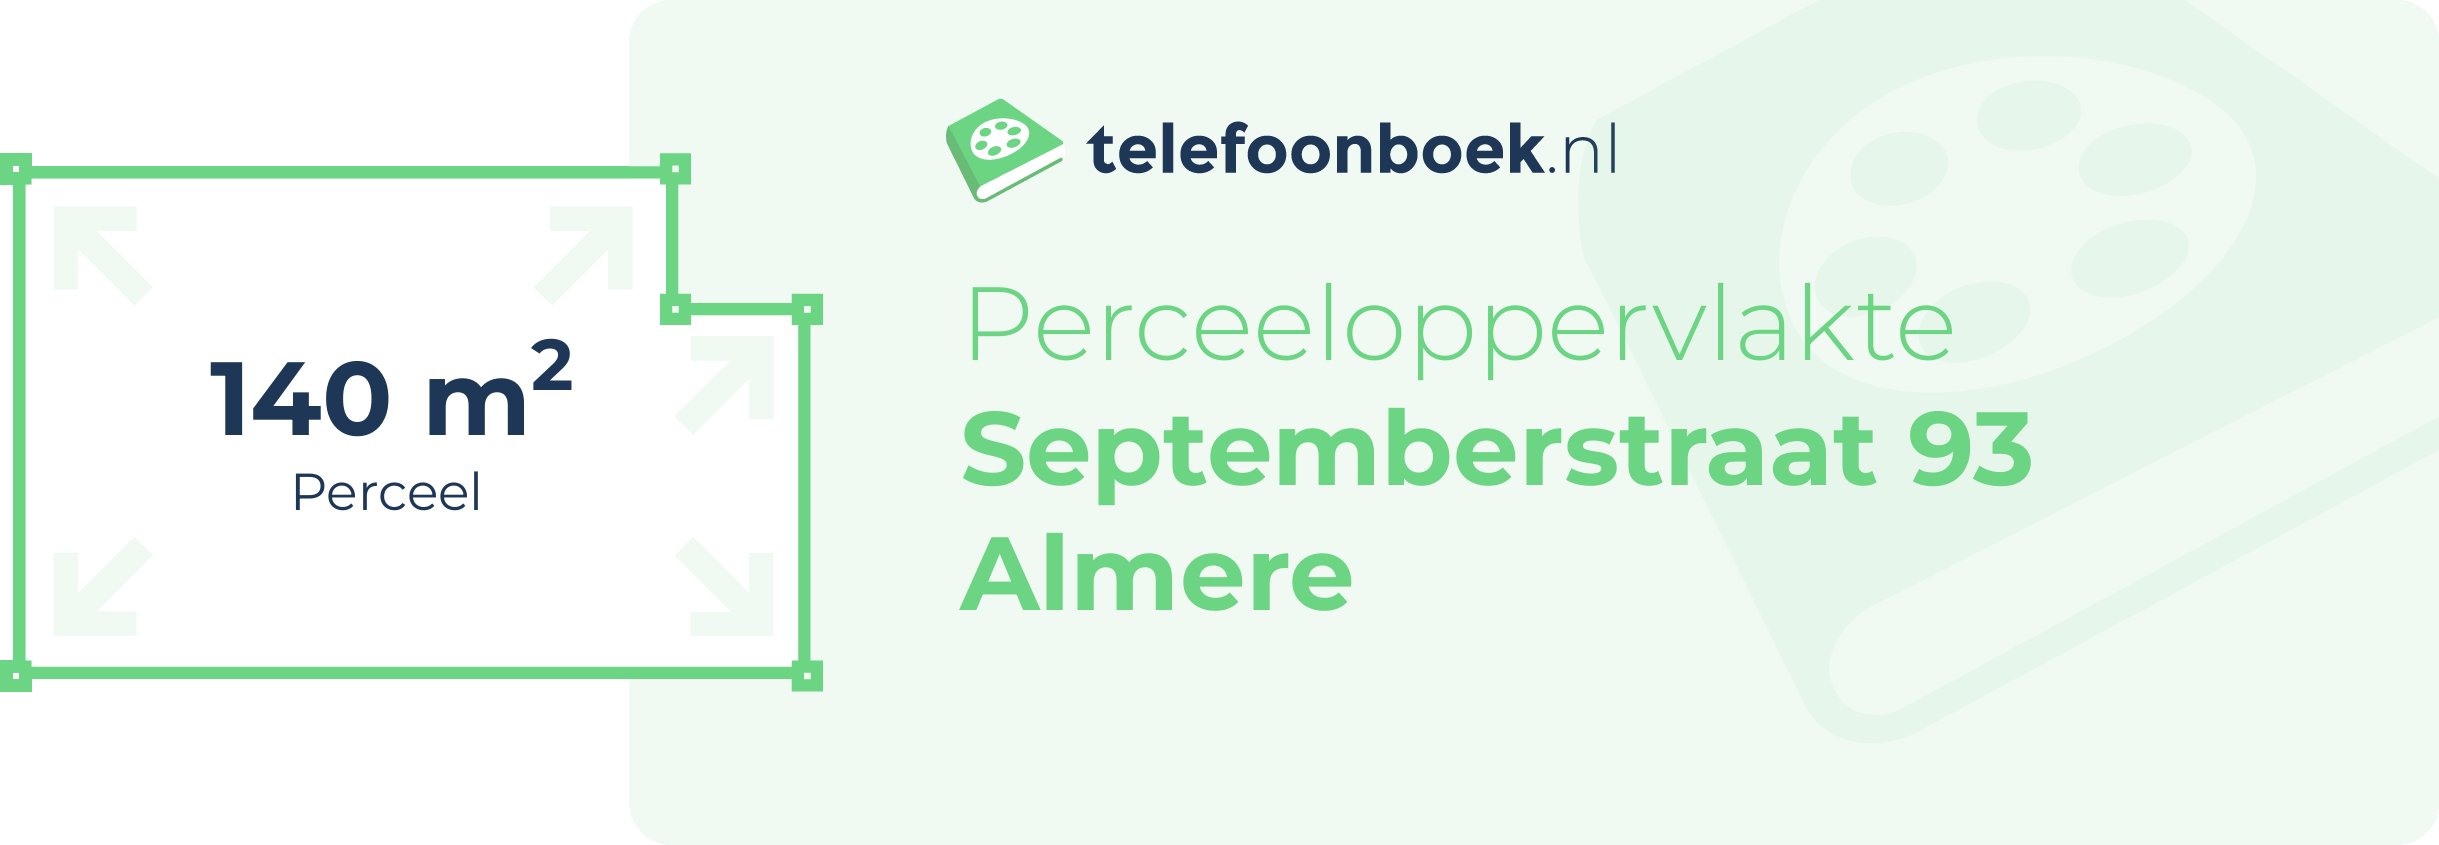 Perceeloppervlakte Septemberstraat 93 Almere